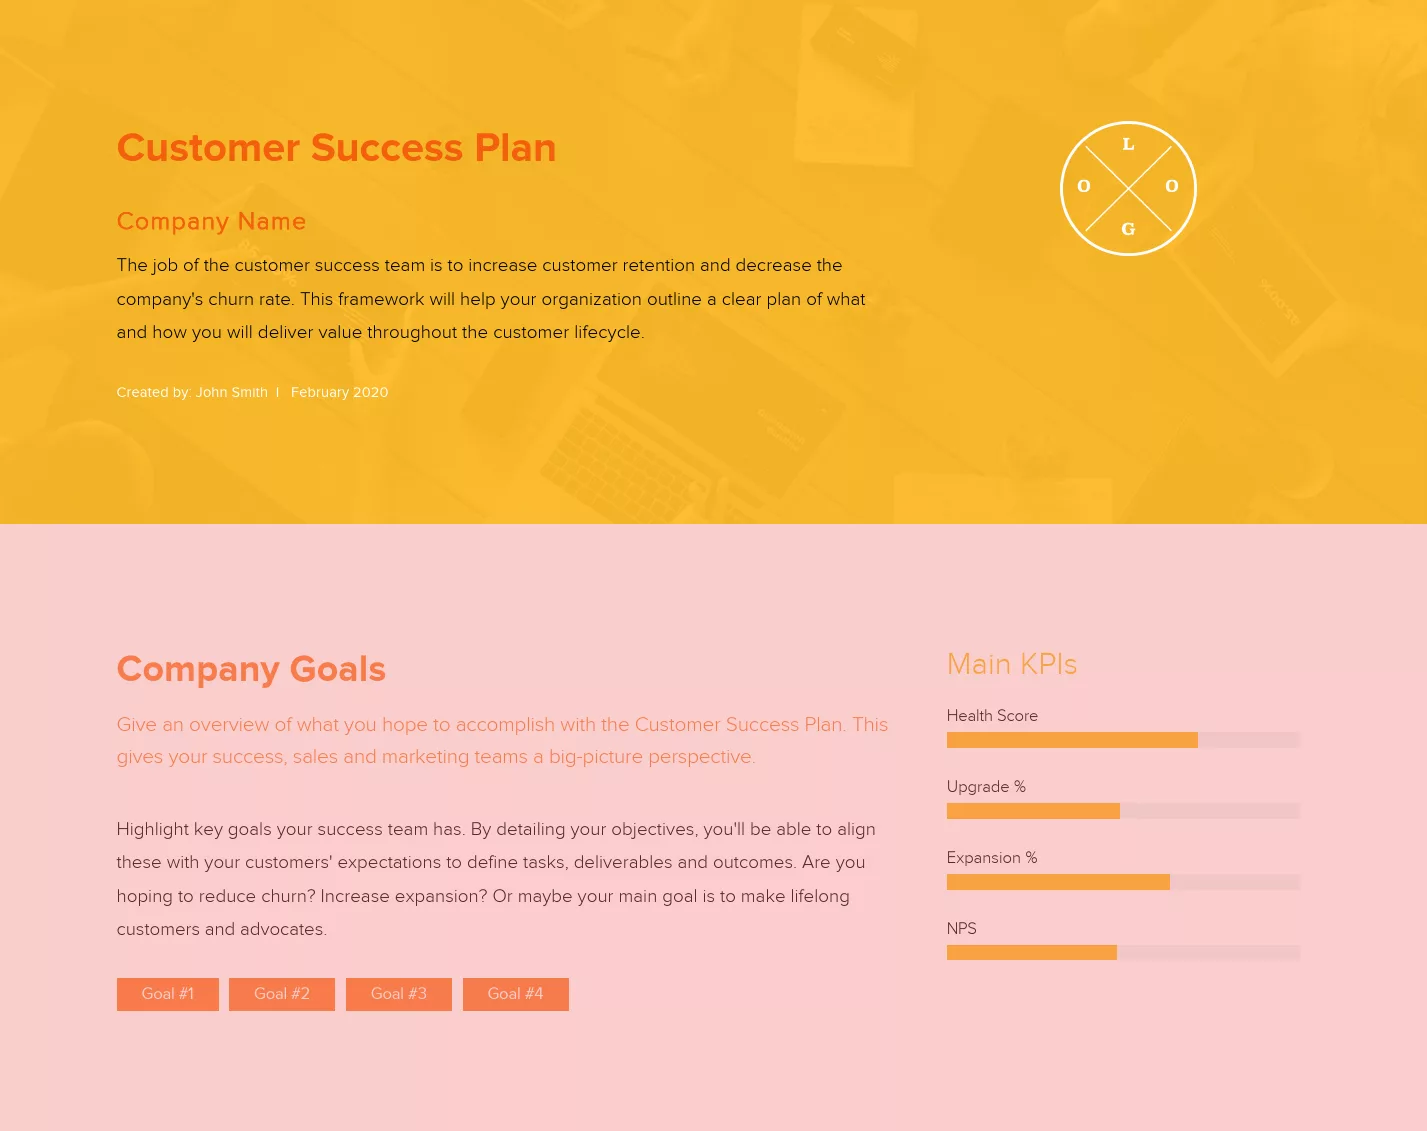 Step 2. Highlight Your Customer Success Team’s Key Goals